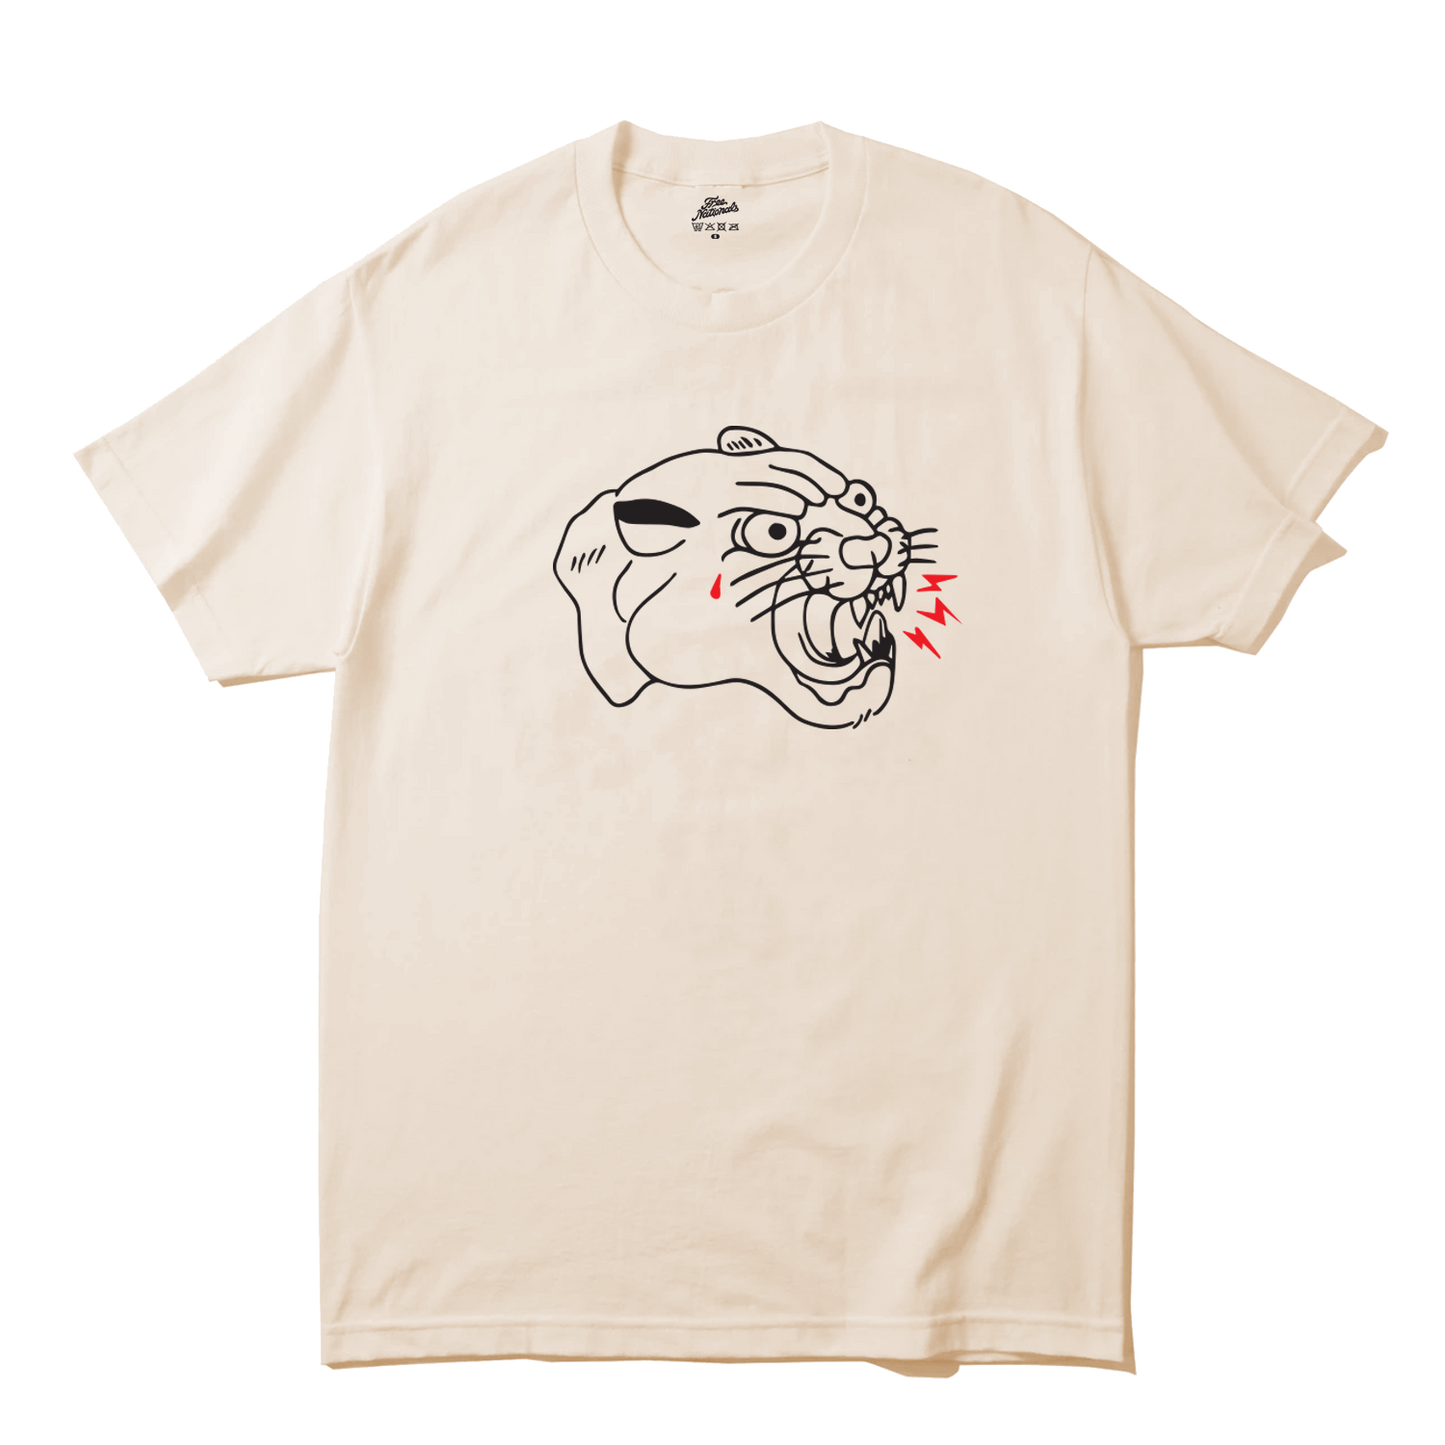 Free Nationals - Crawling Panther T-Shirt